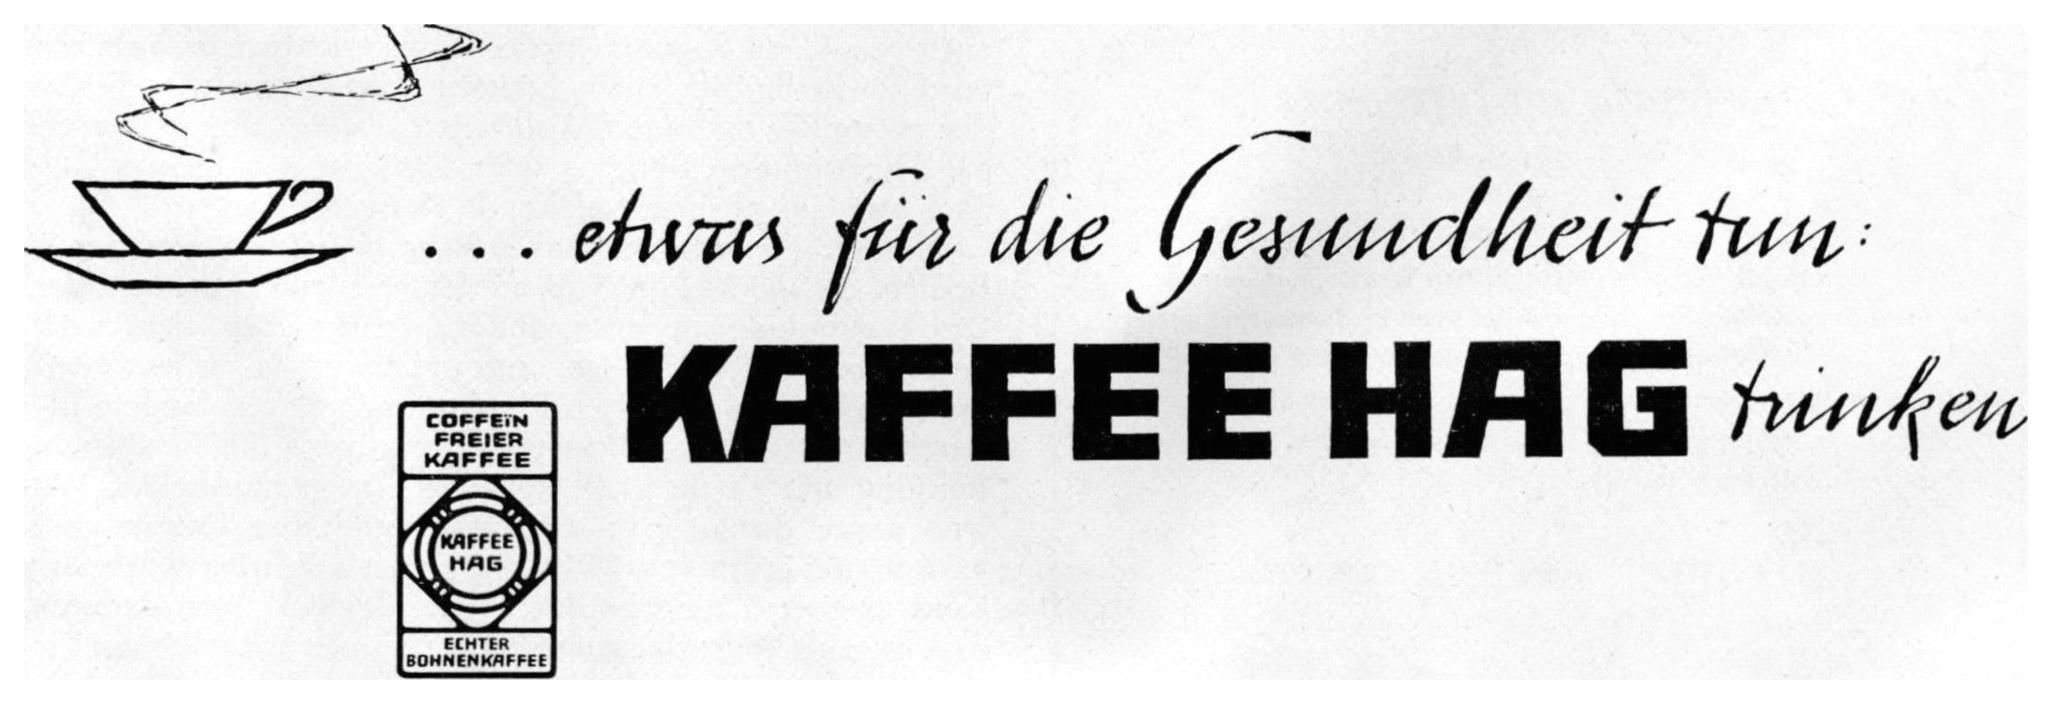 Kaffee Hag 1958 158.jpg